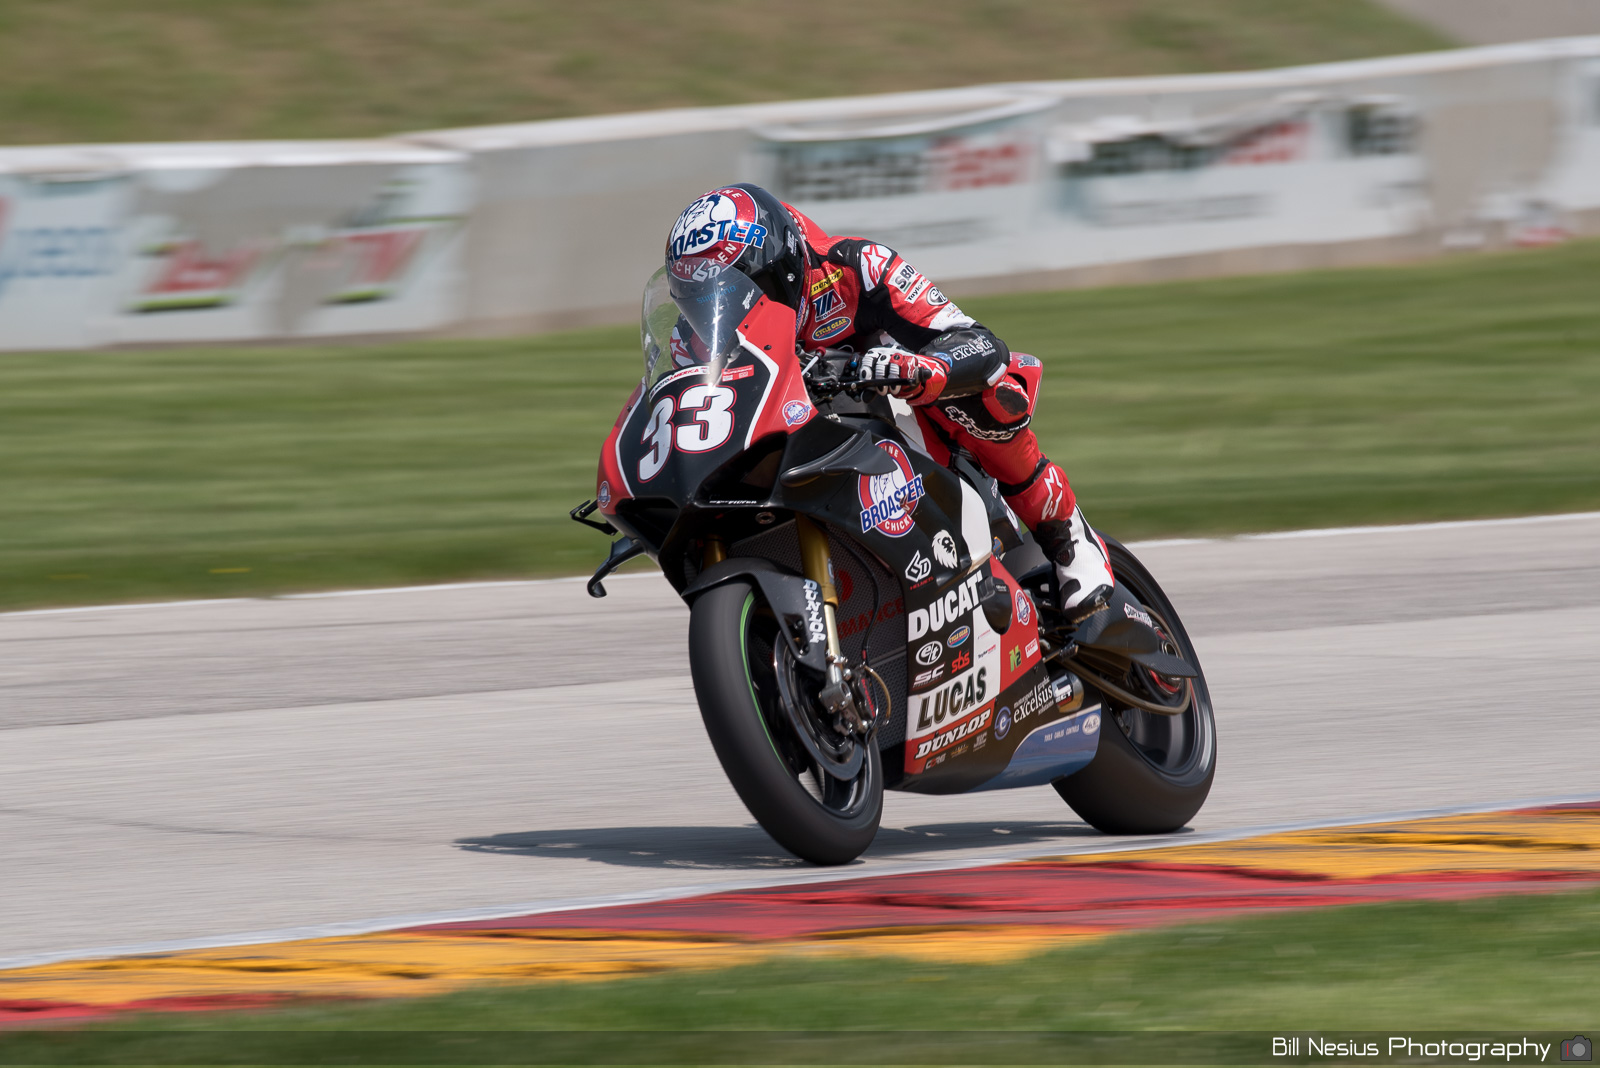 Kyle Wyman on the Number 33 Kyle Wyman Racing Ducati Panigale V4R / DSC_7510 / 4